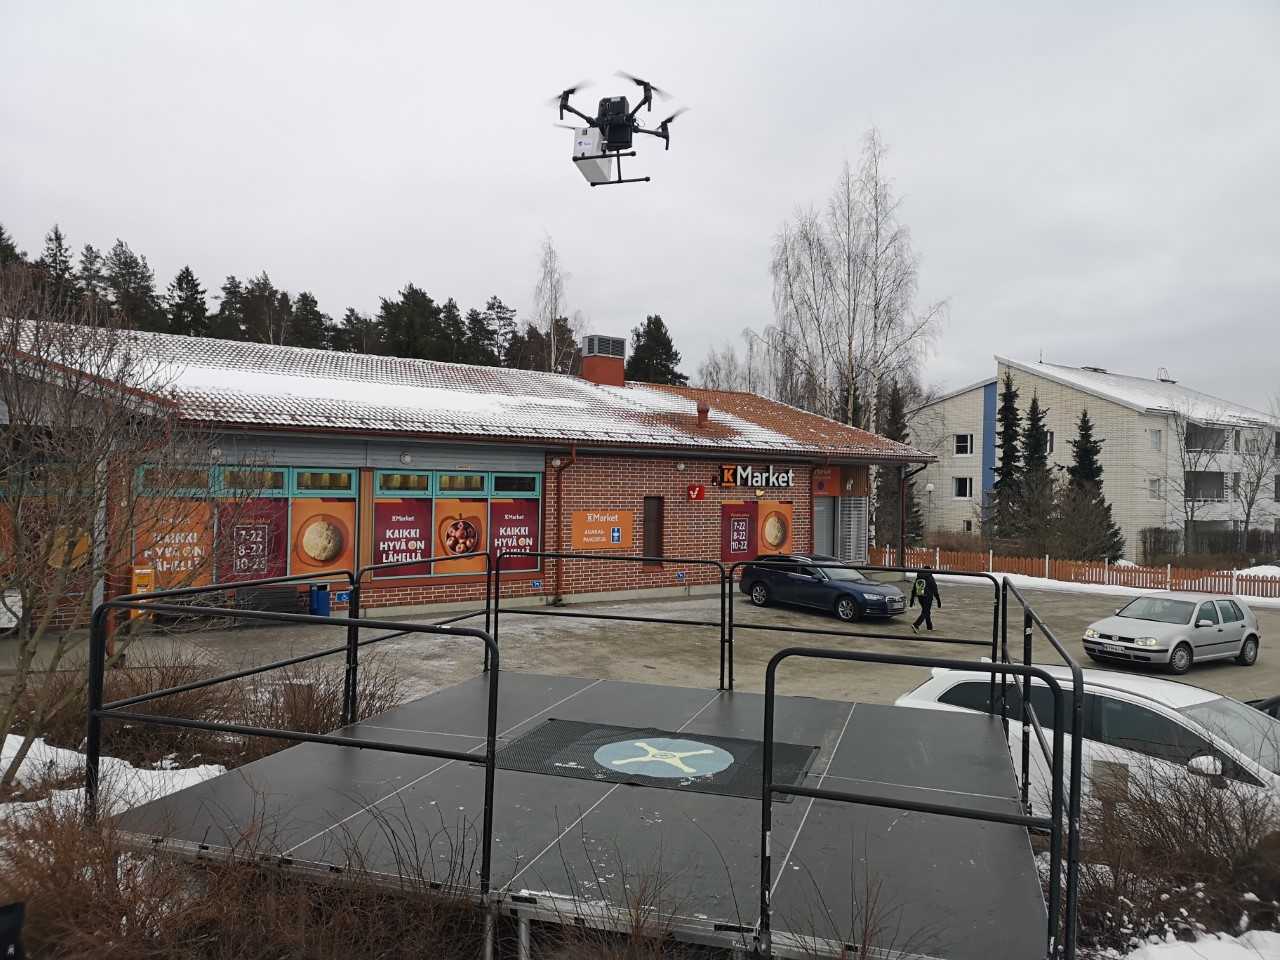 skyports drone image